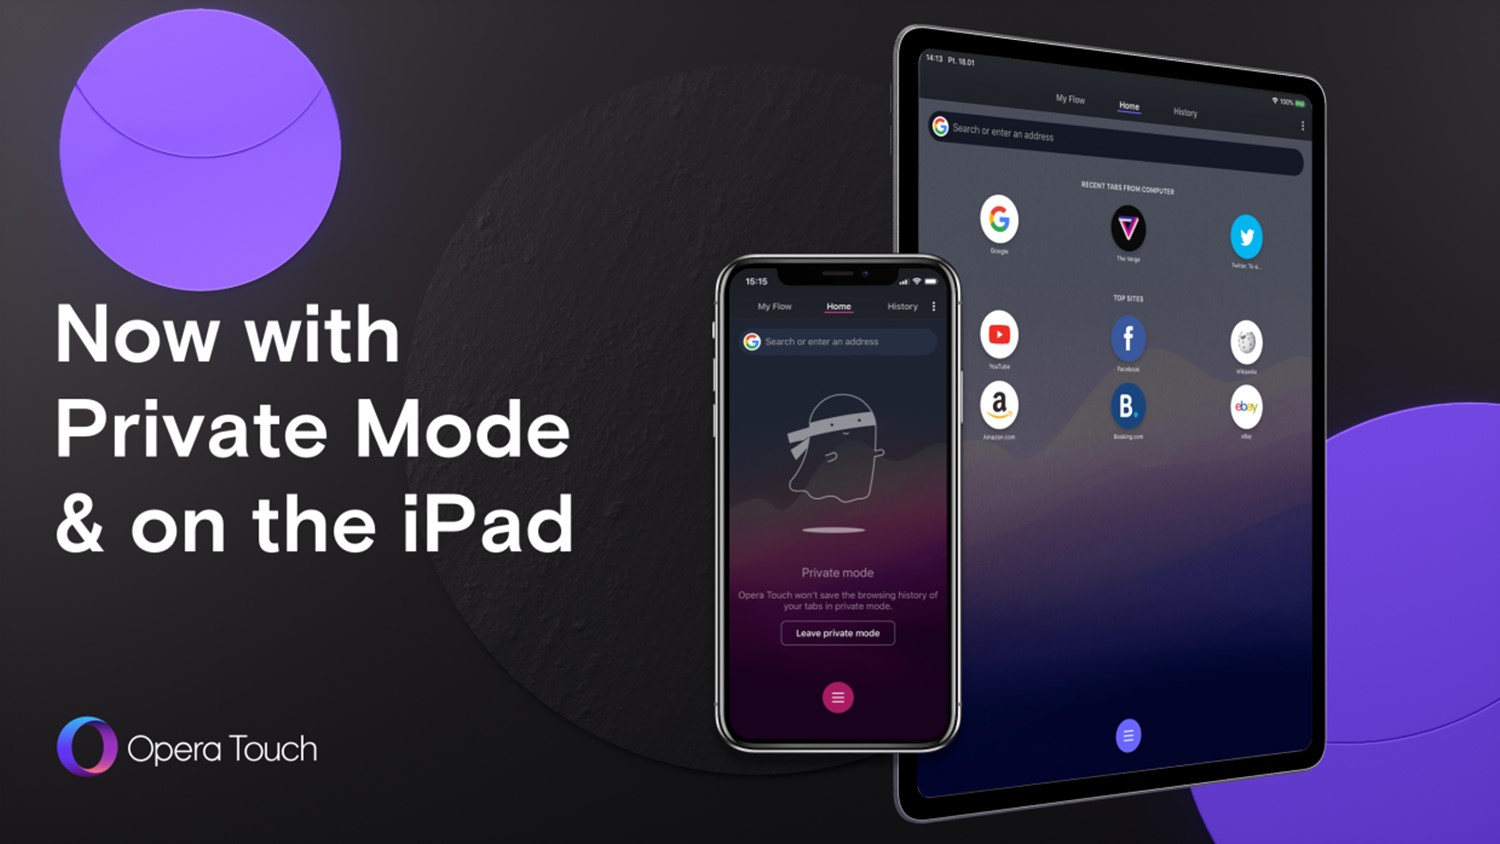 Opera Touch Kini Hadir Untuk iPad, Mod Privasi Hadir Untuk iOS Dan Android